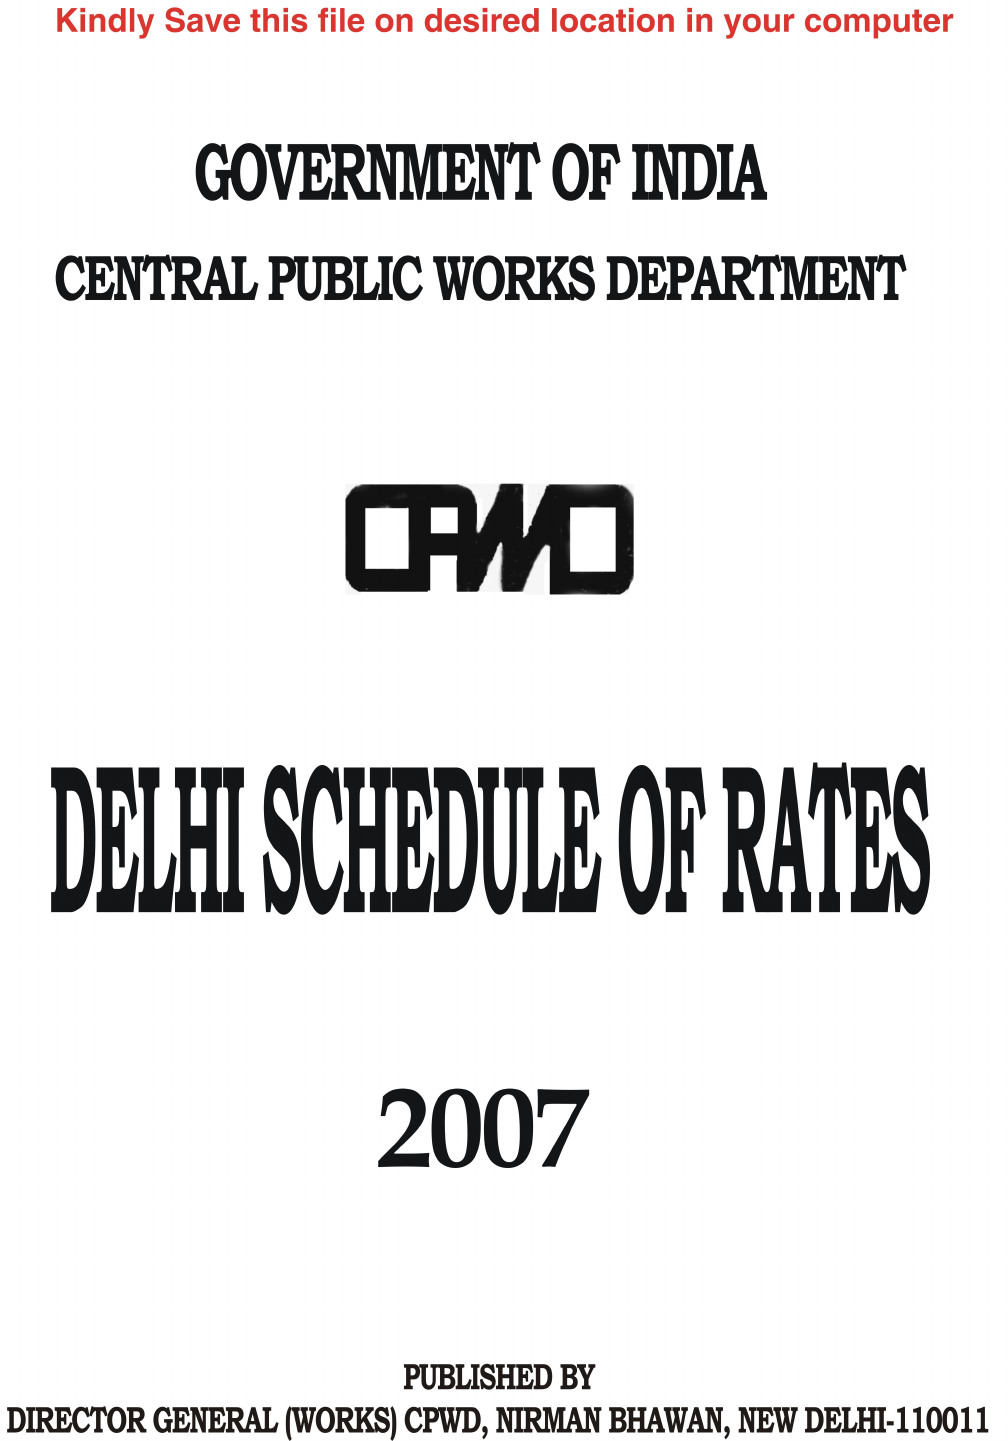 cpwd delhi schedule of rates 2012 pdf